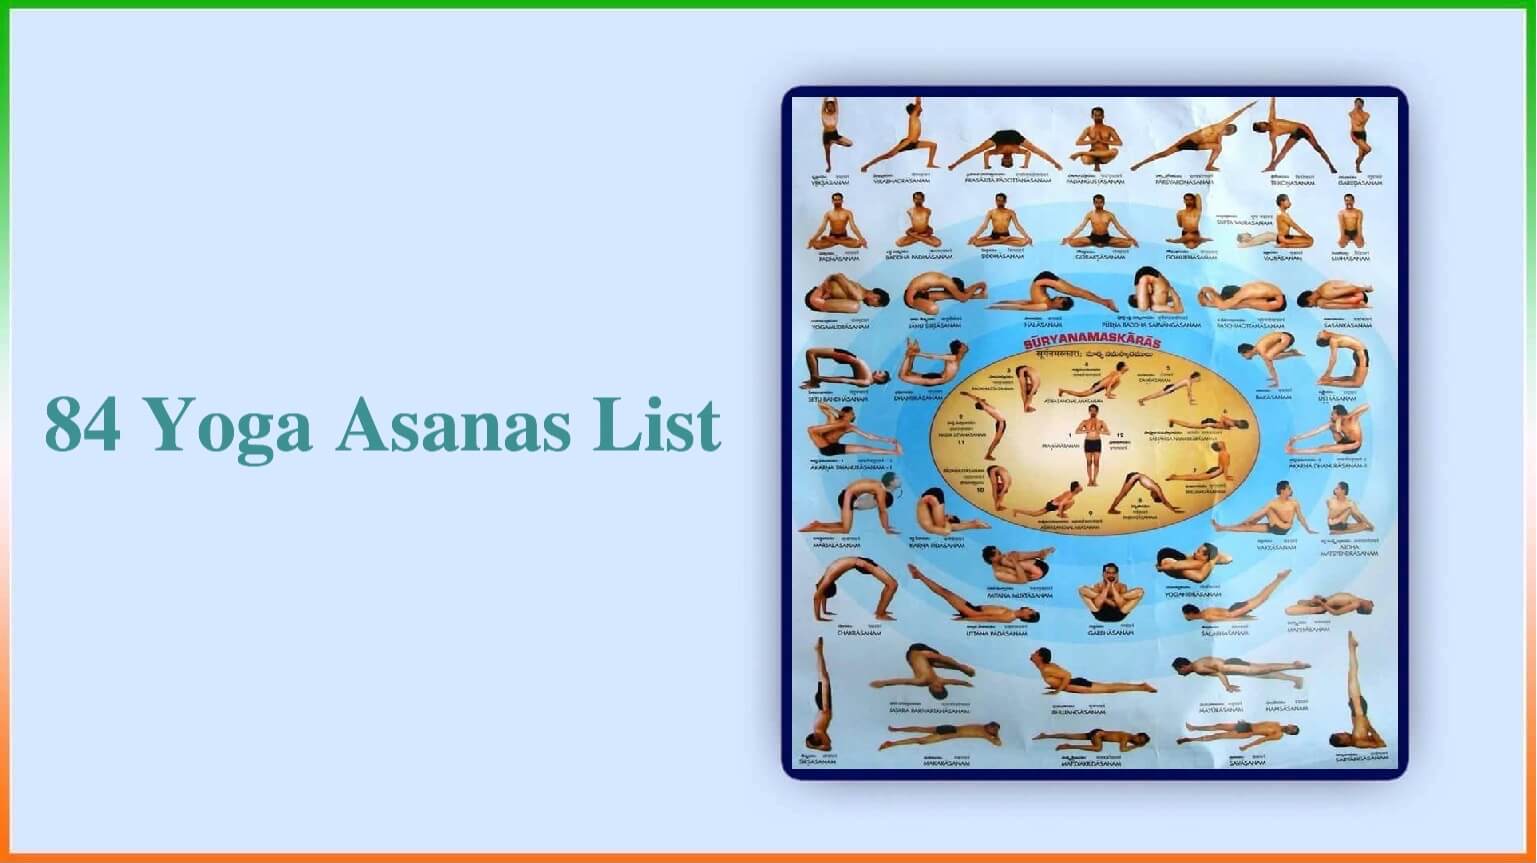 84 Yoga Asanas List